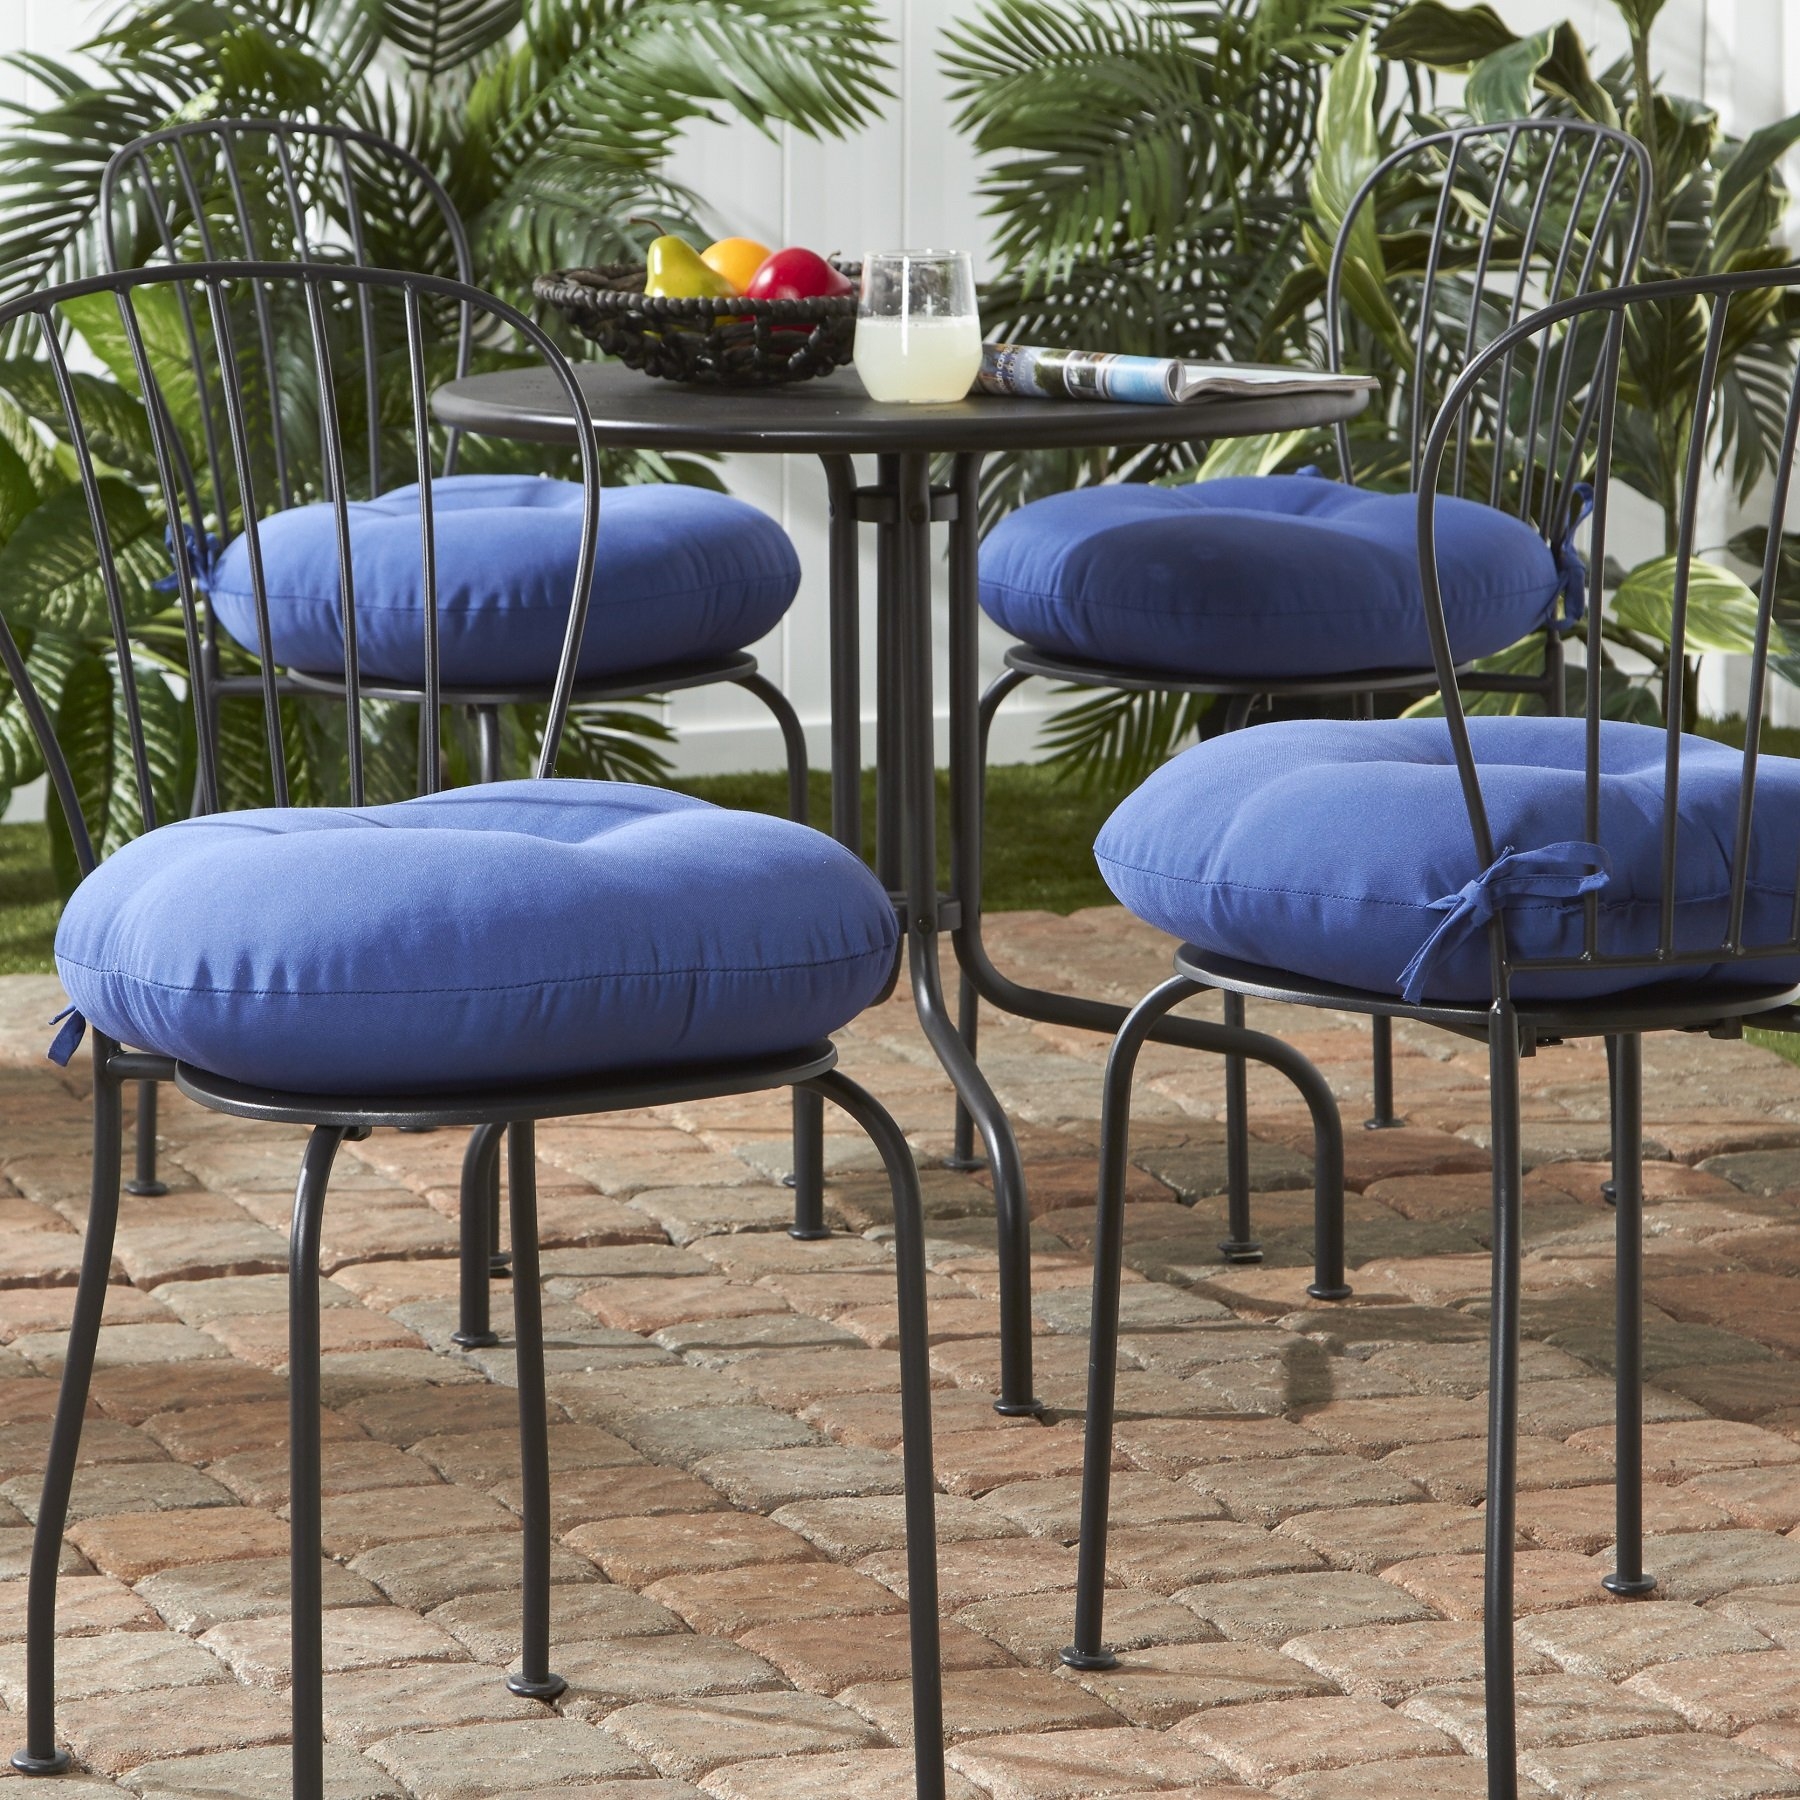 Round Outdoor Chair Cushion Visualhunt, 16 Inch Round Outdoor Chair Cushions